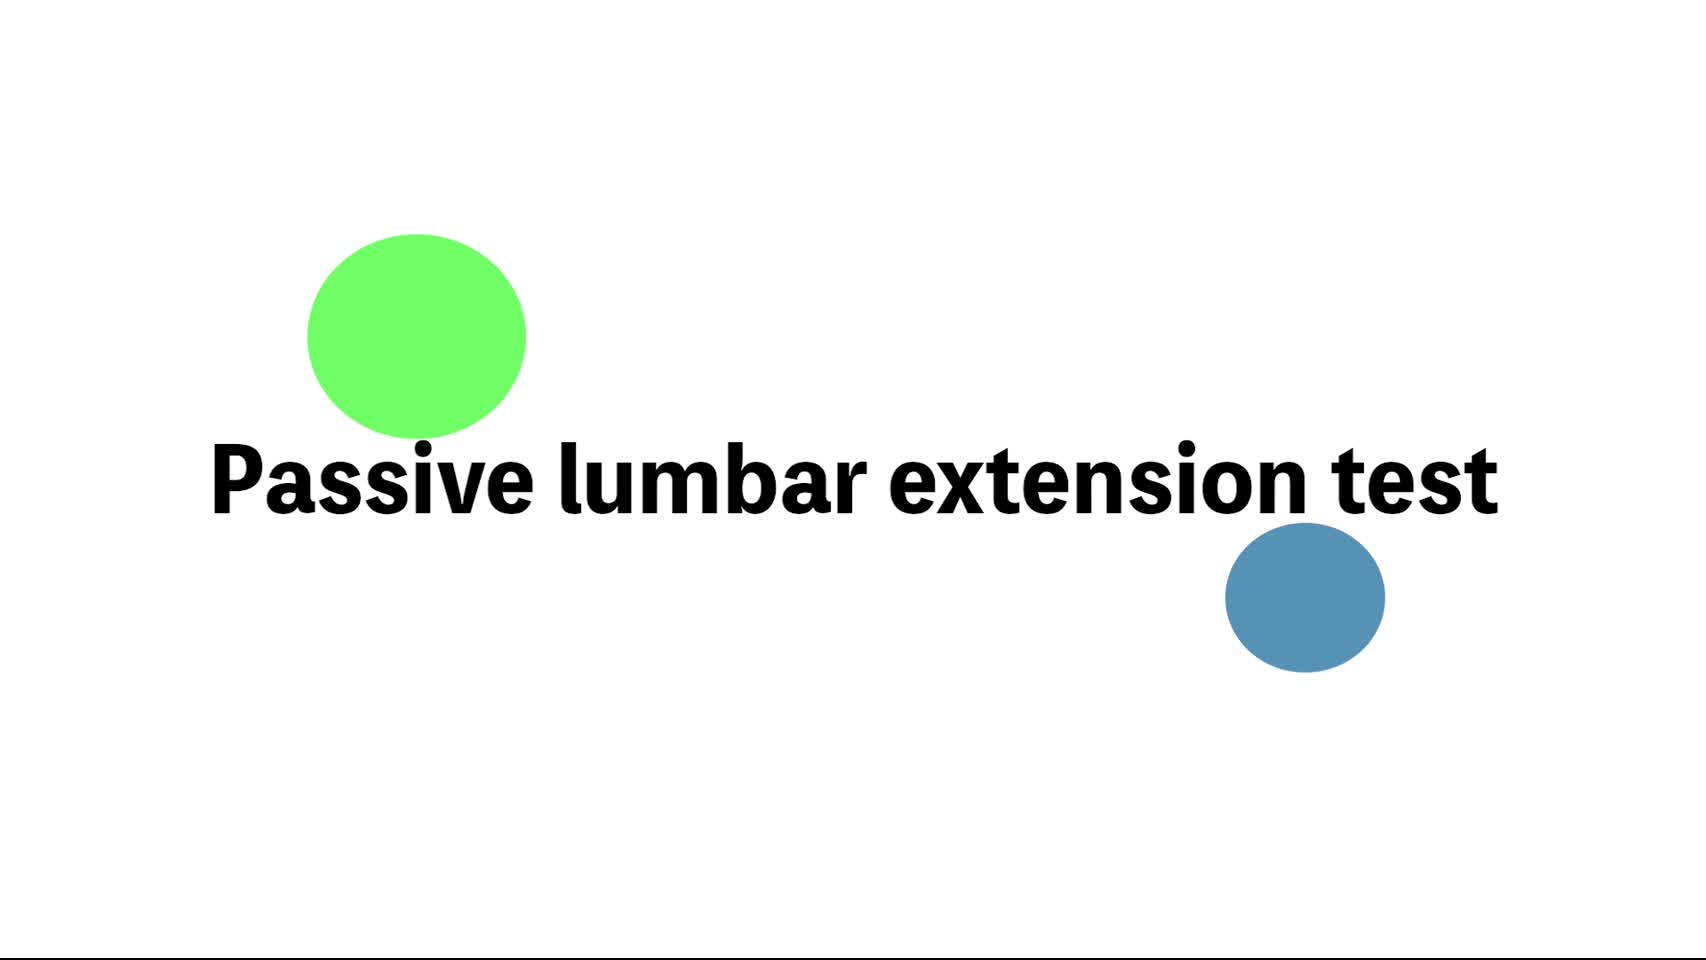 5．Passive lumbar extension test